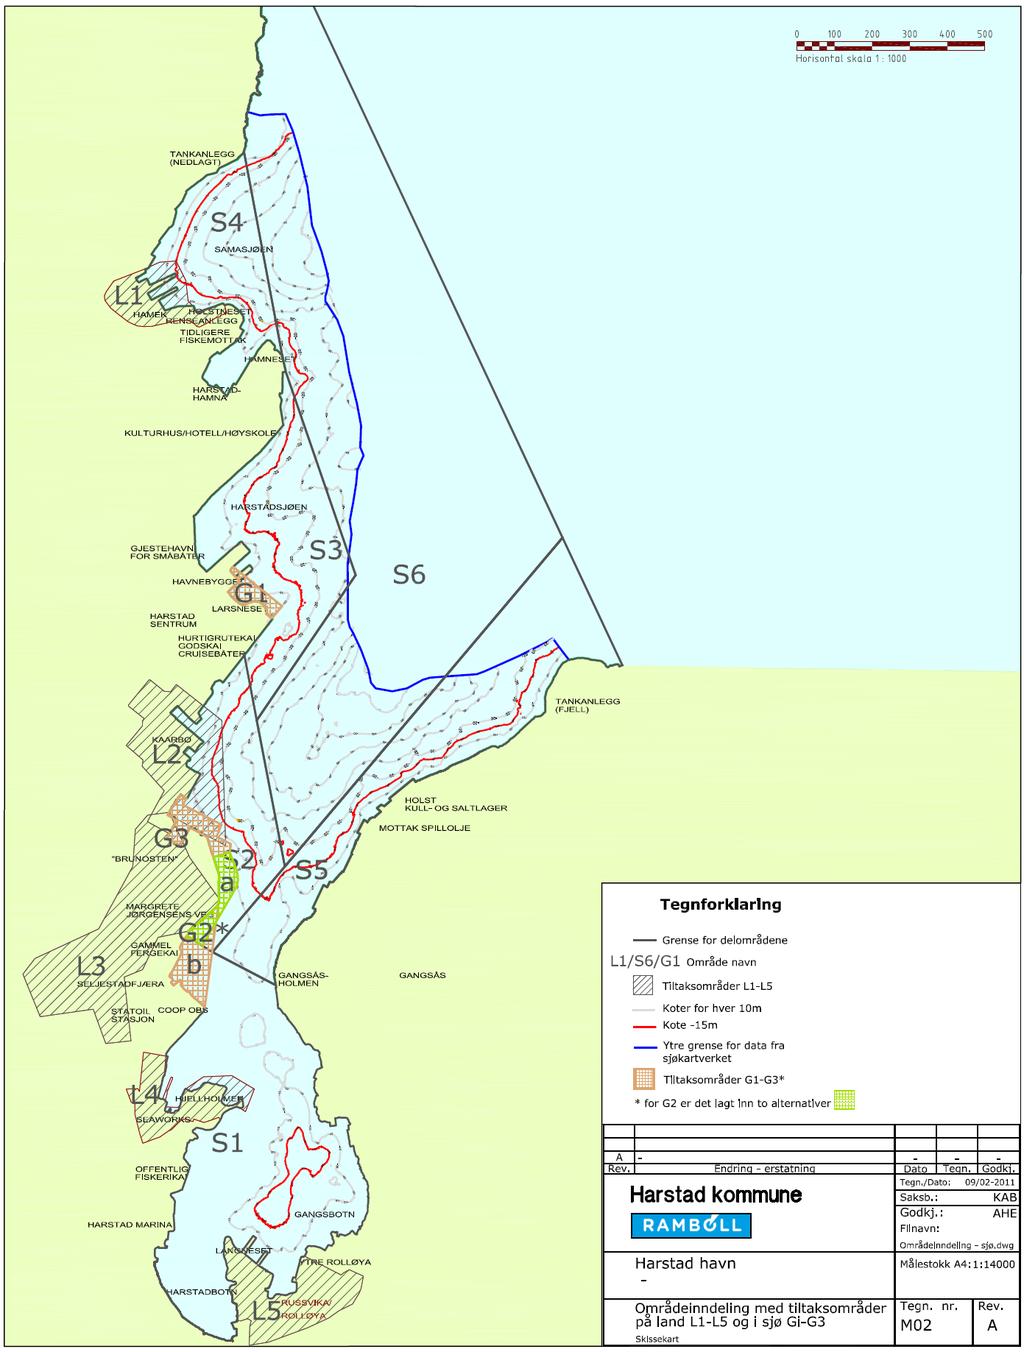 Figur 2. Områder for kaiutbygging med disponeringsløsninger for forurenset sediment fra mudring i Harstad havn.